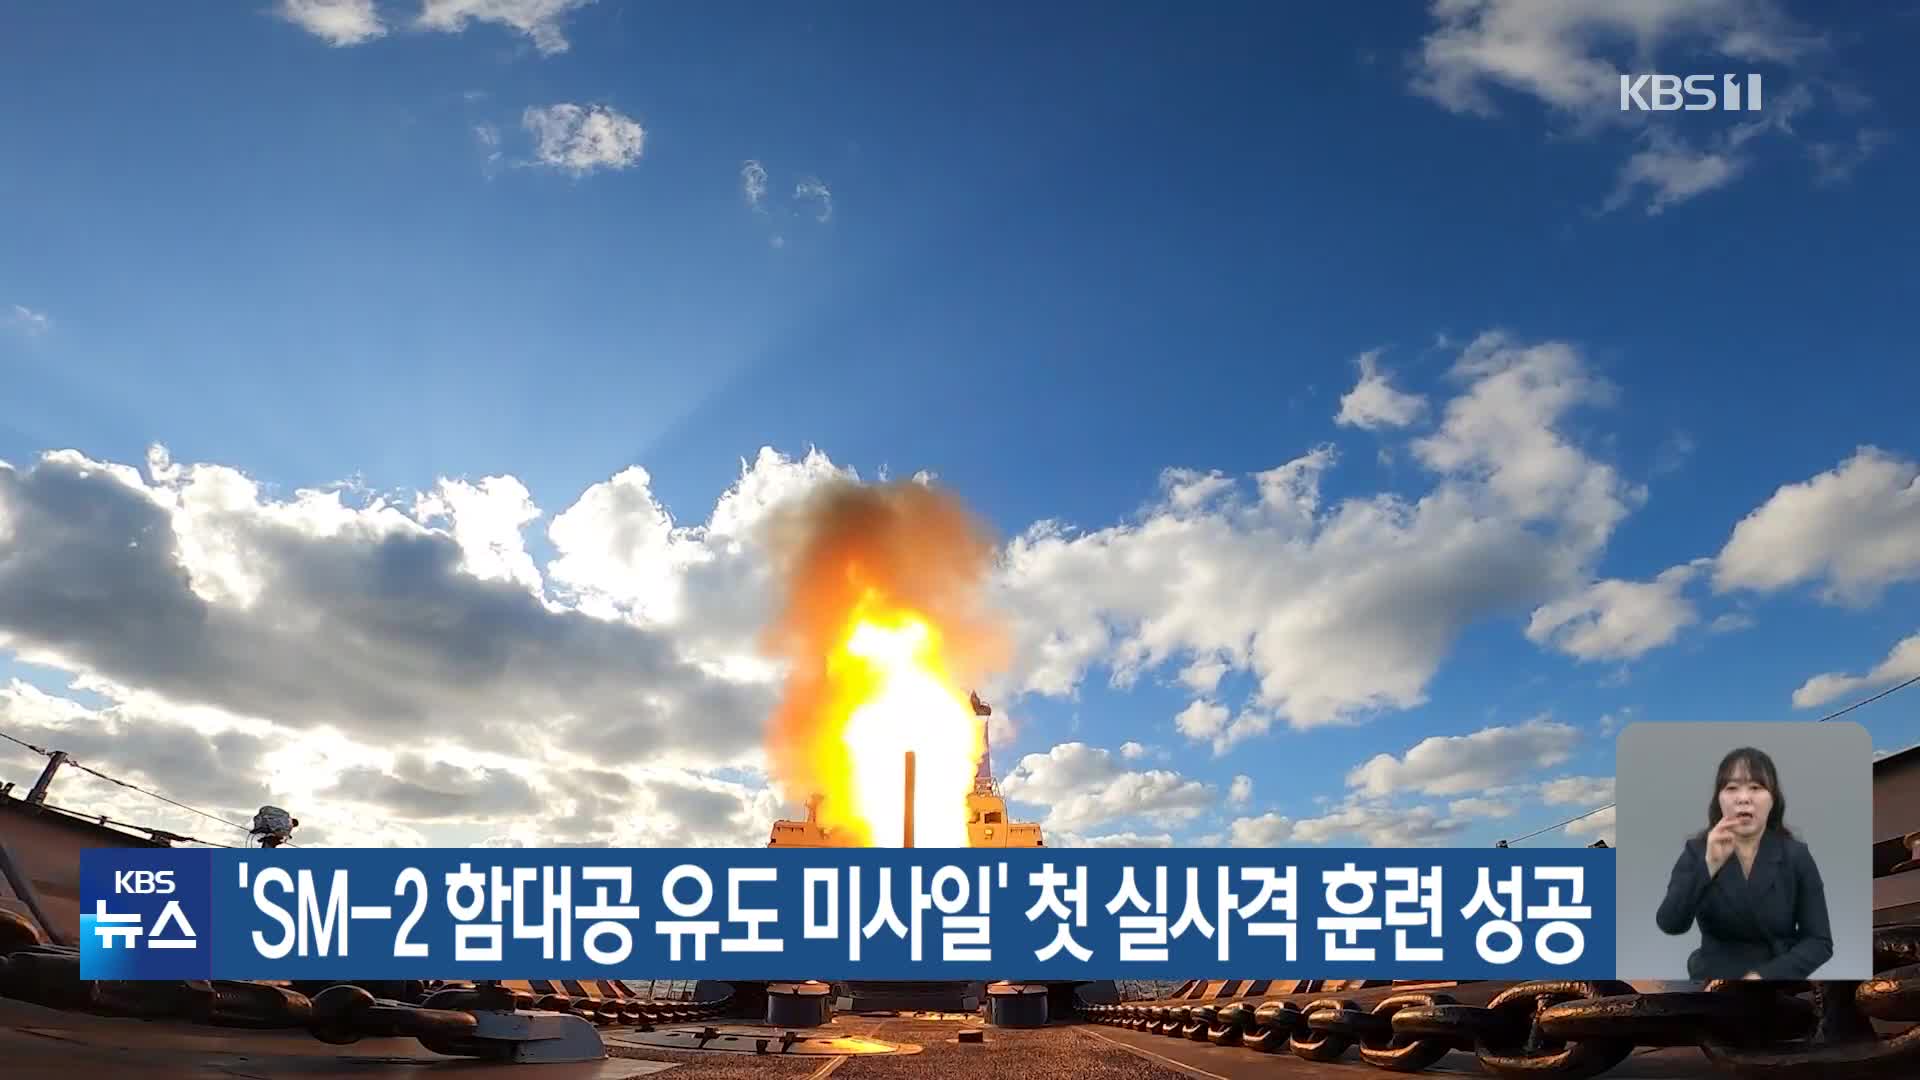 ‘SM-2 함대공 유도 미사일’ 첫 실사격 훈련 성공